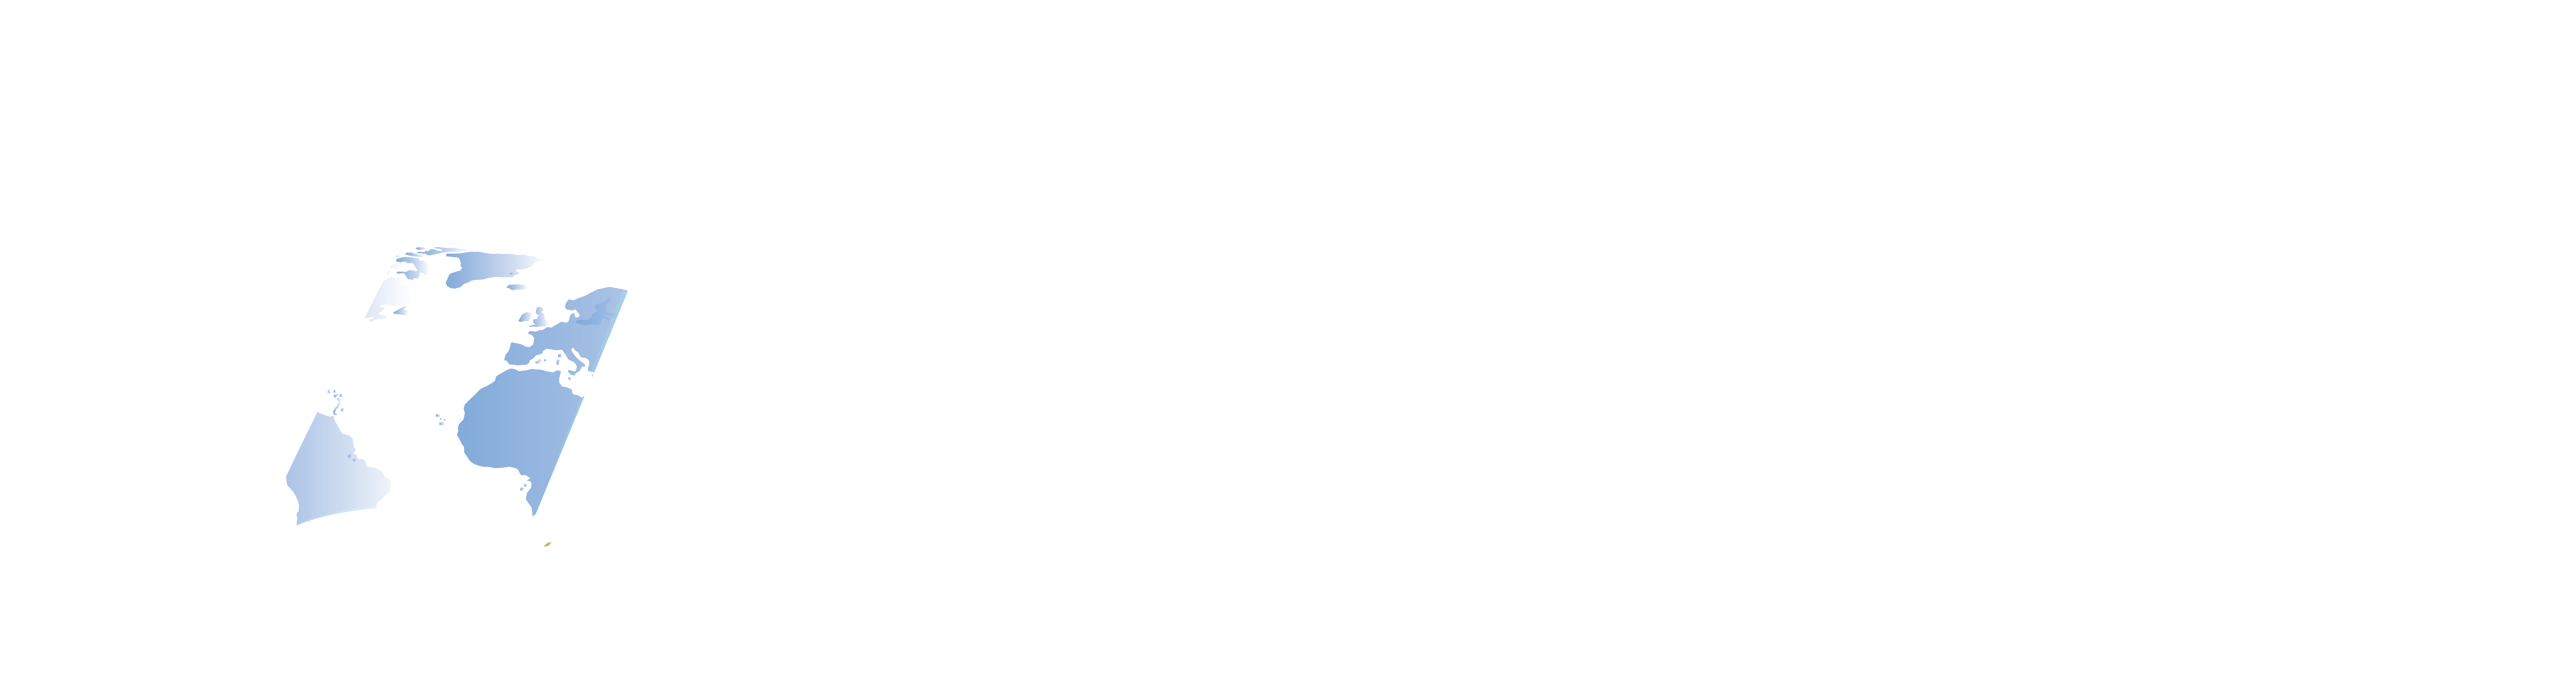 Global Smart Institute